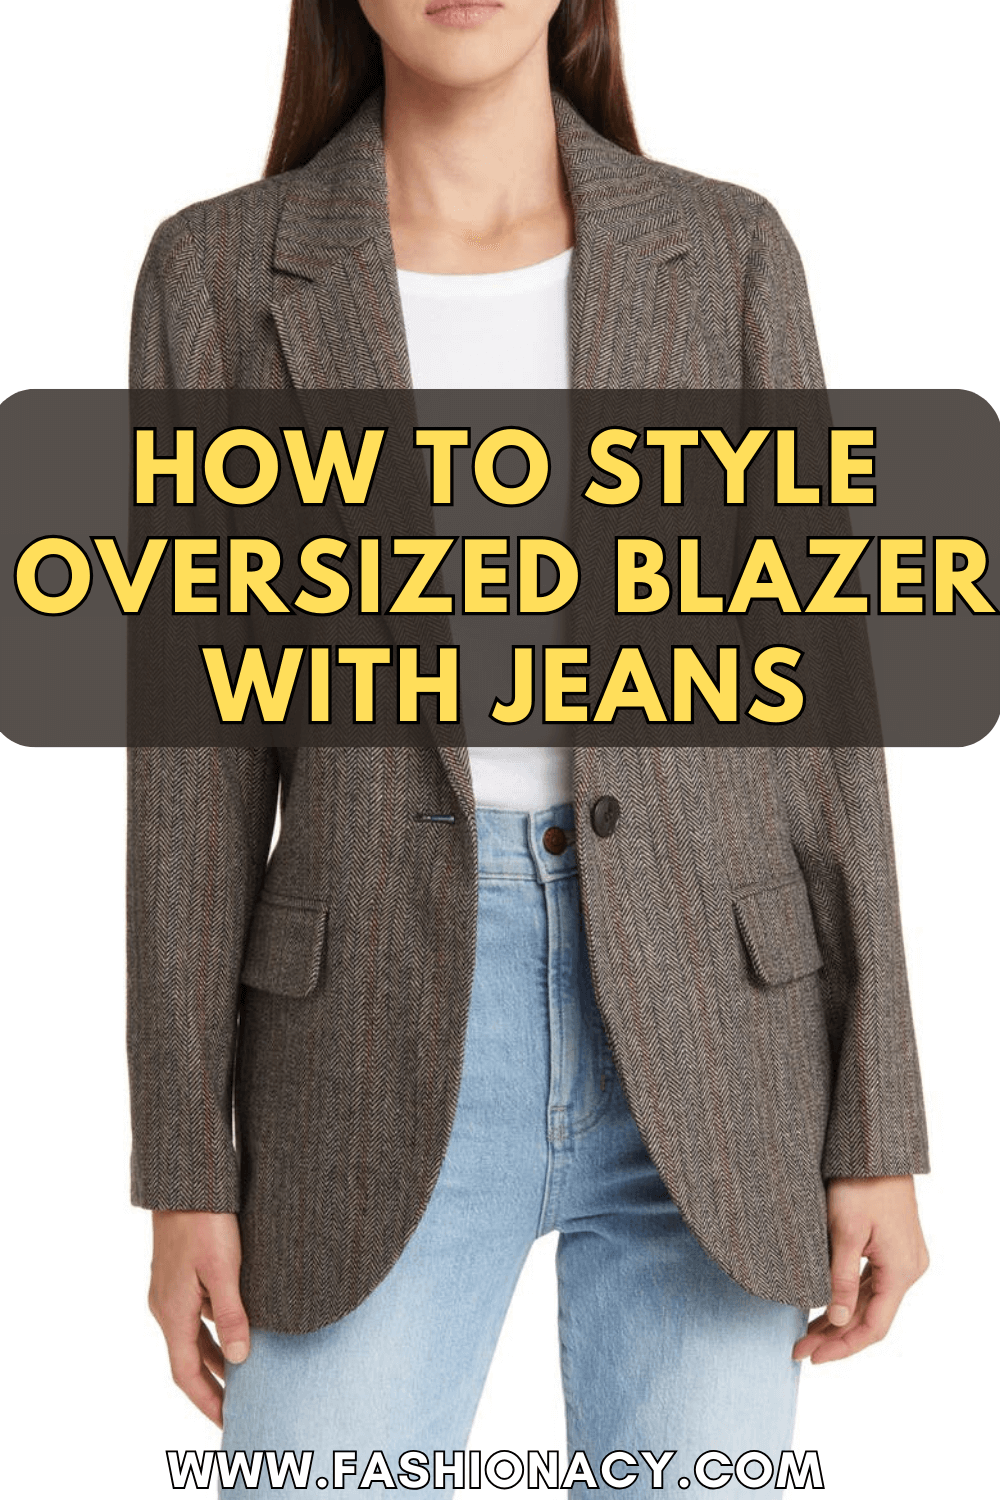 How to Style Oversized Blazer